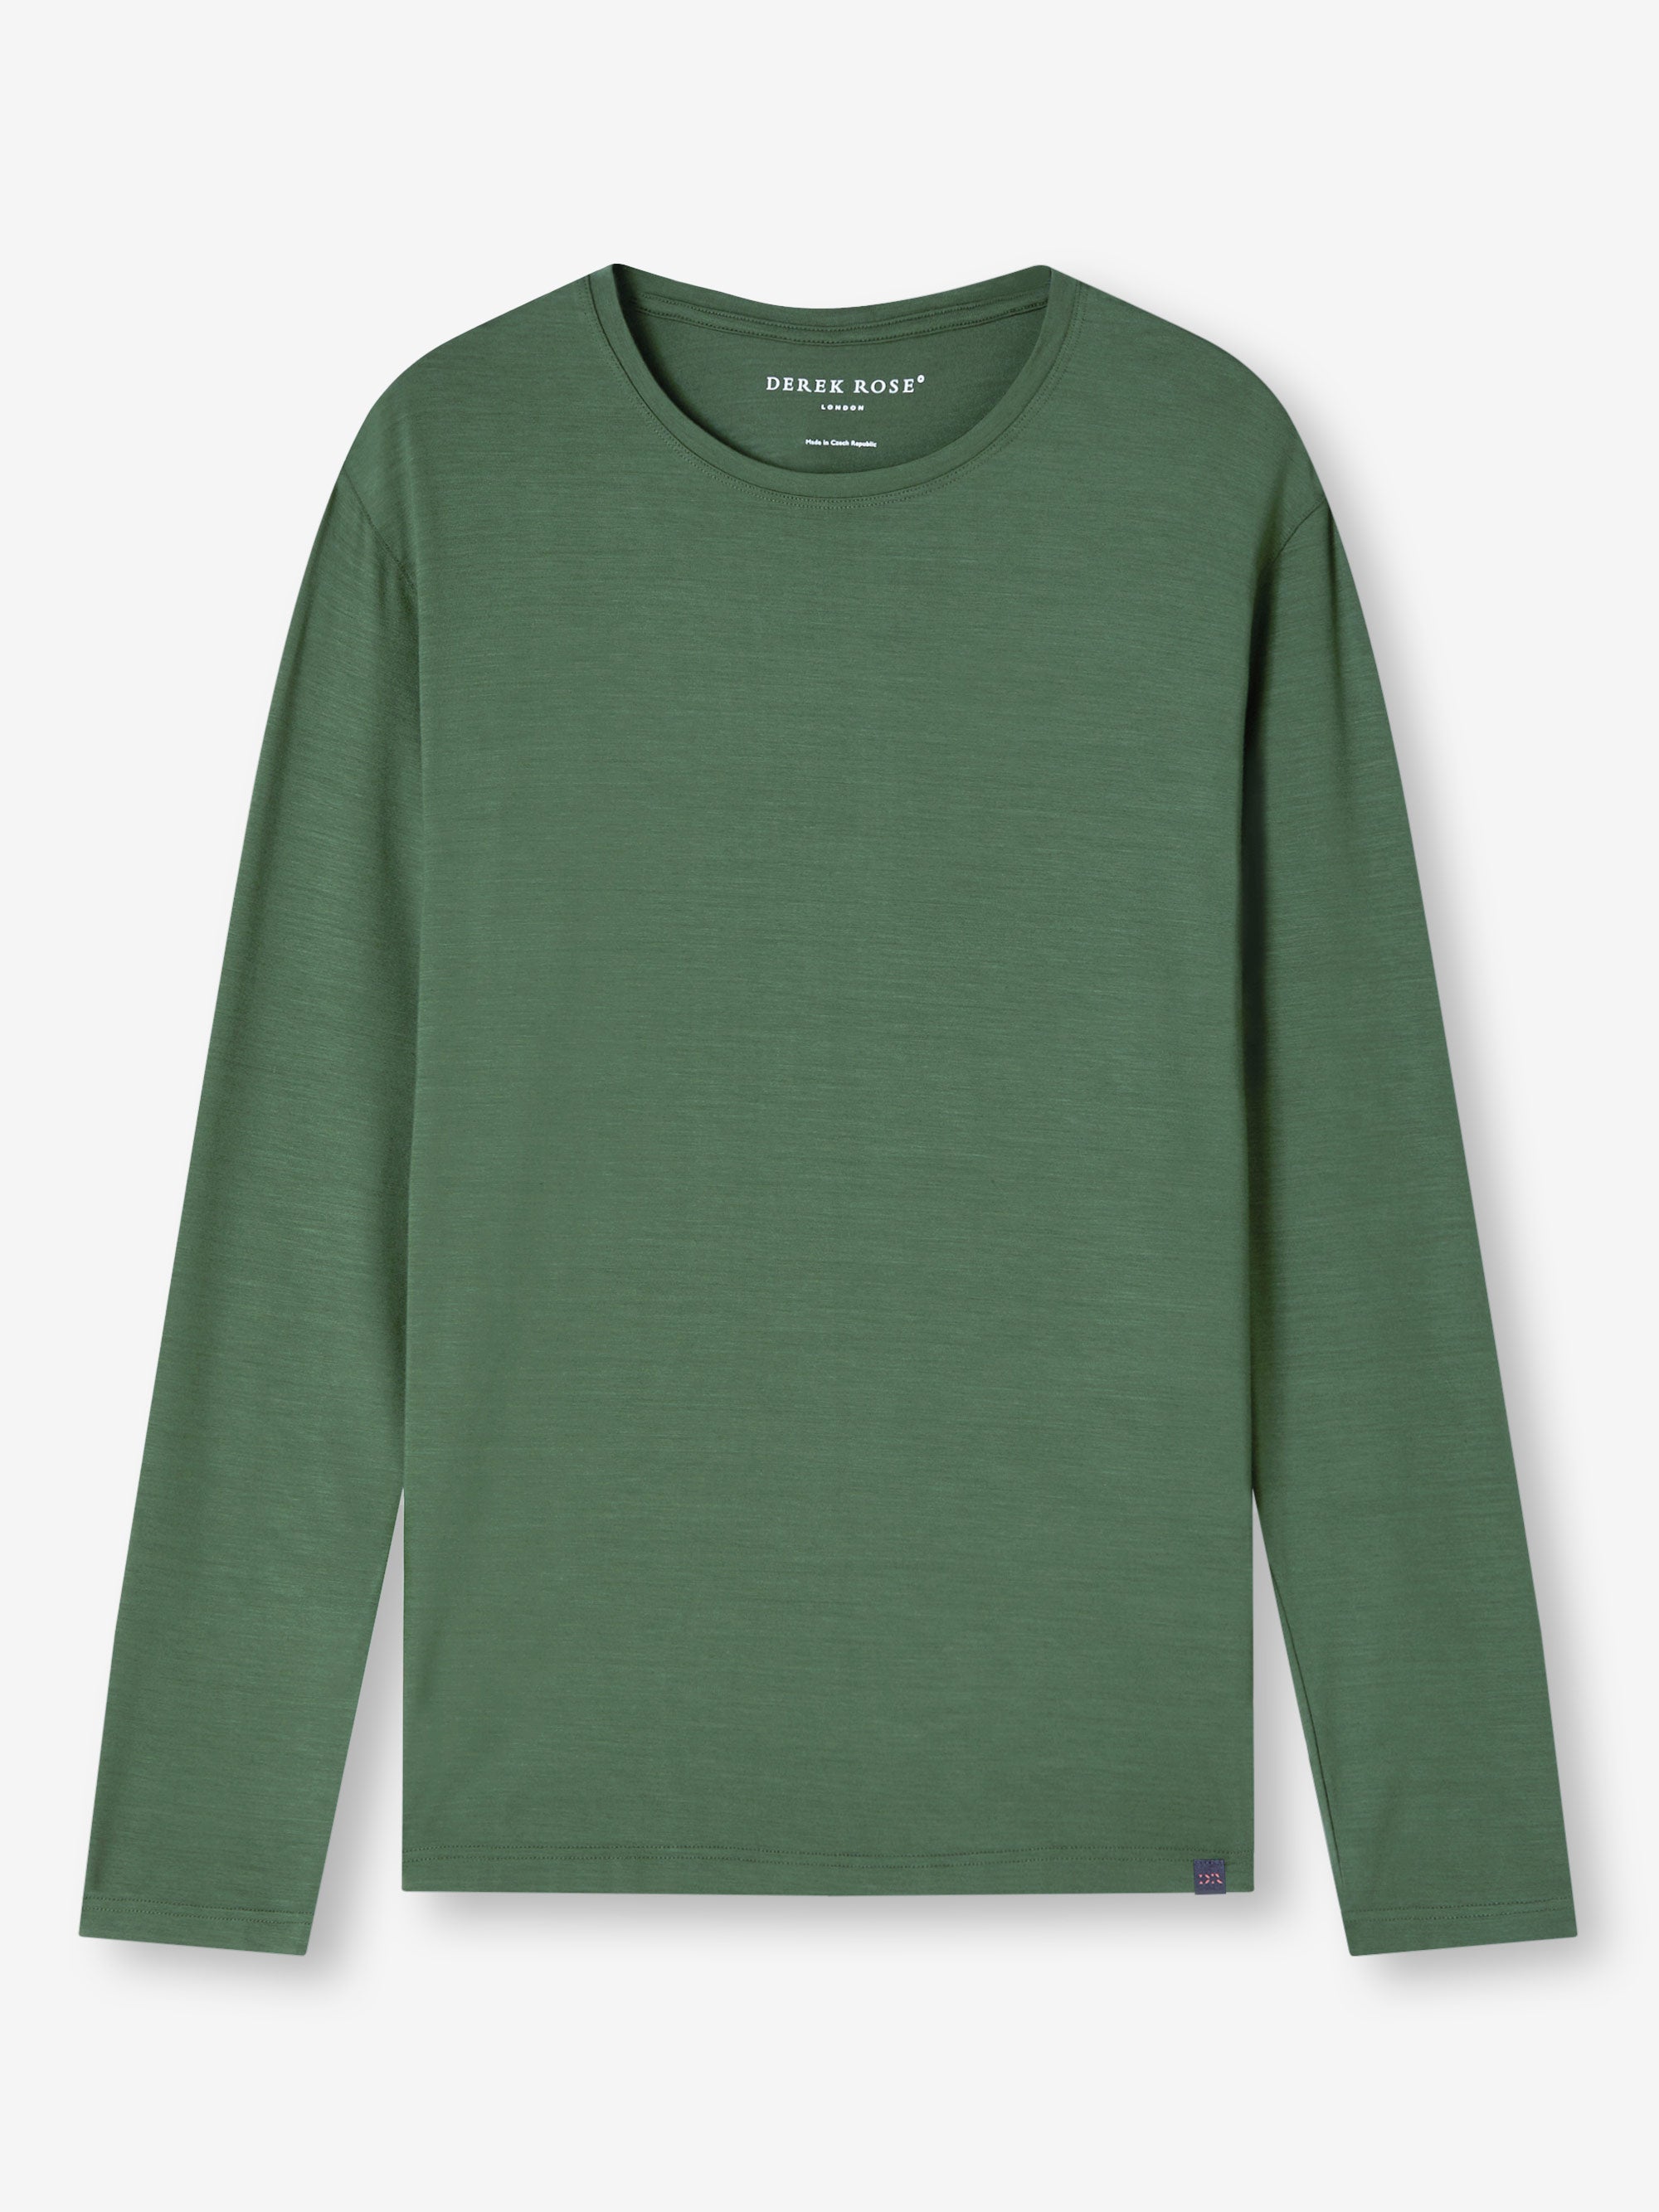 Men's Long Sleeve T-Shirt Basel Micro Modal Stretch Hunter Green